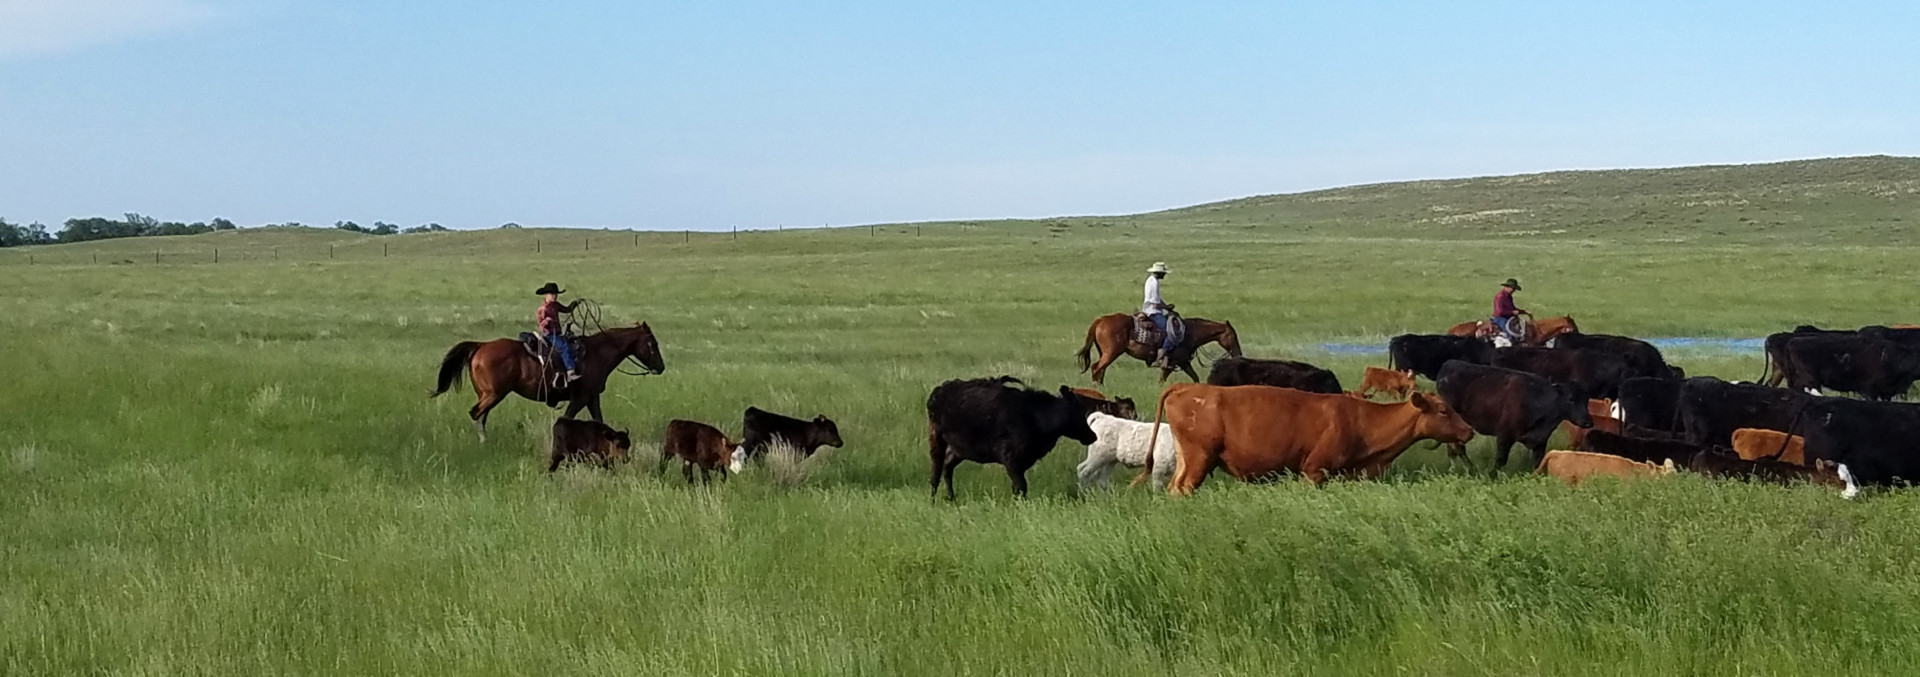 South Dakota Cattle Ranch for Sale Stewart Quarter Horse Cattle Ranch